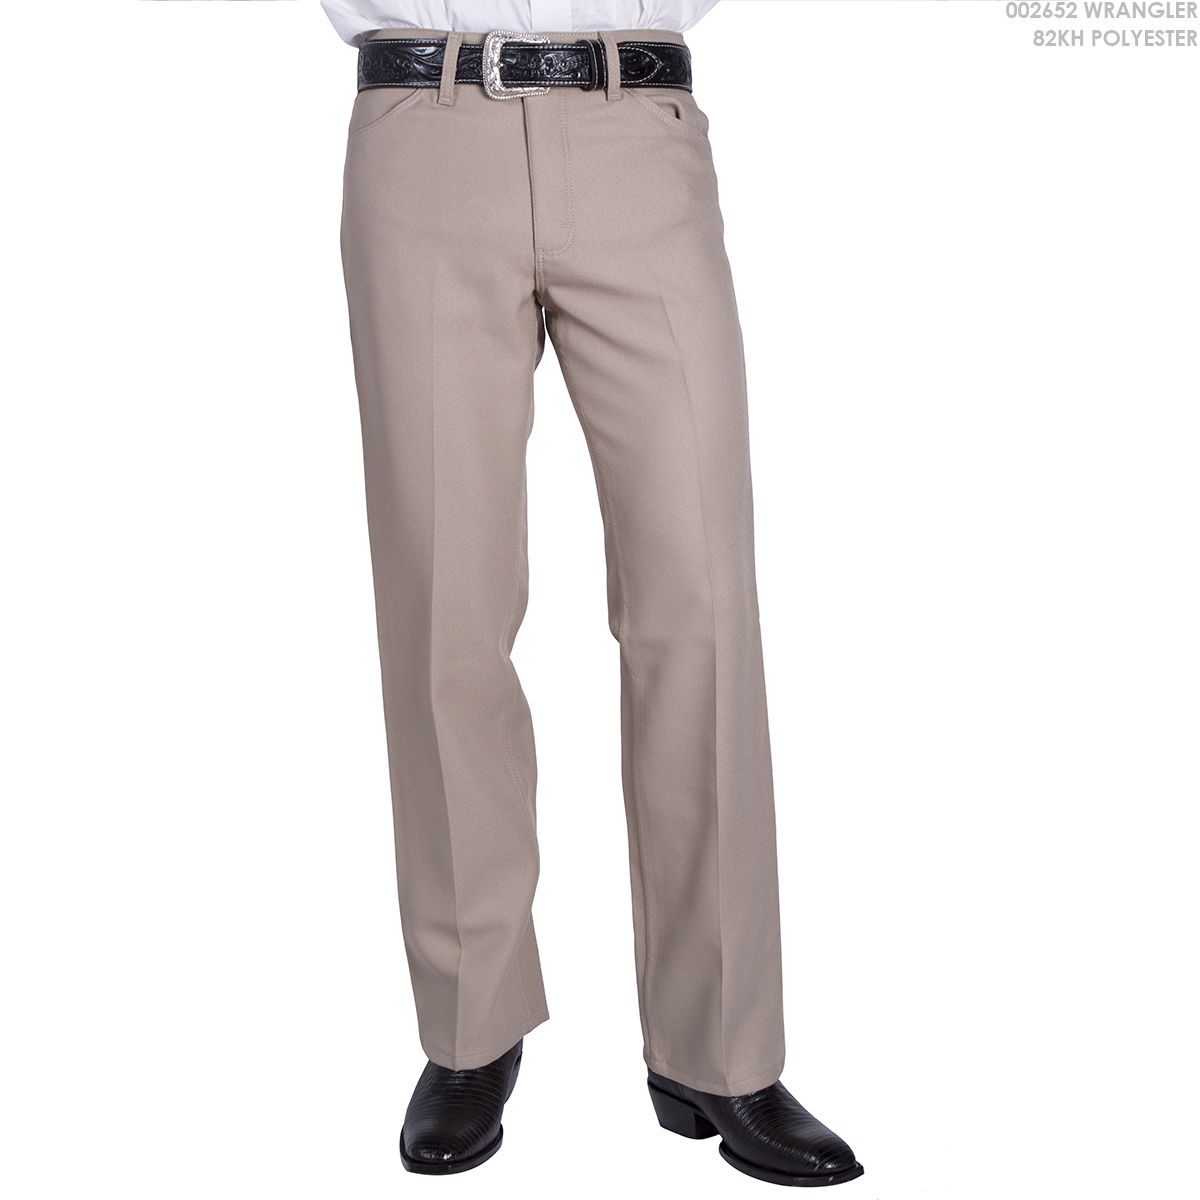 Pantalon Wrangler 82Kh Polyester Color: Beige - JR Western